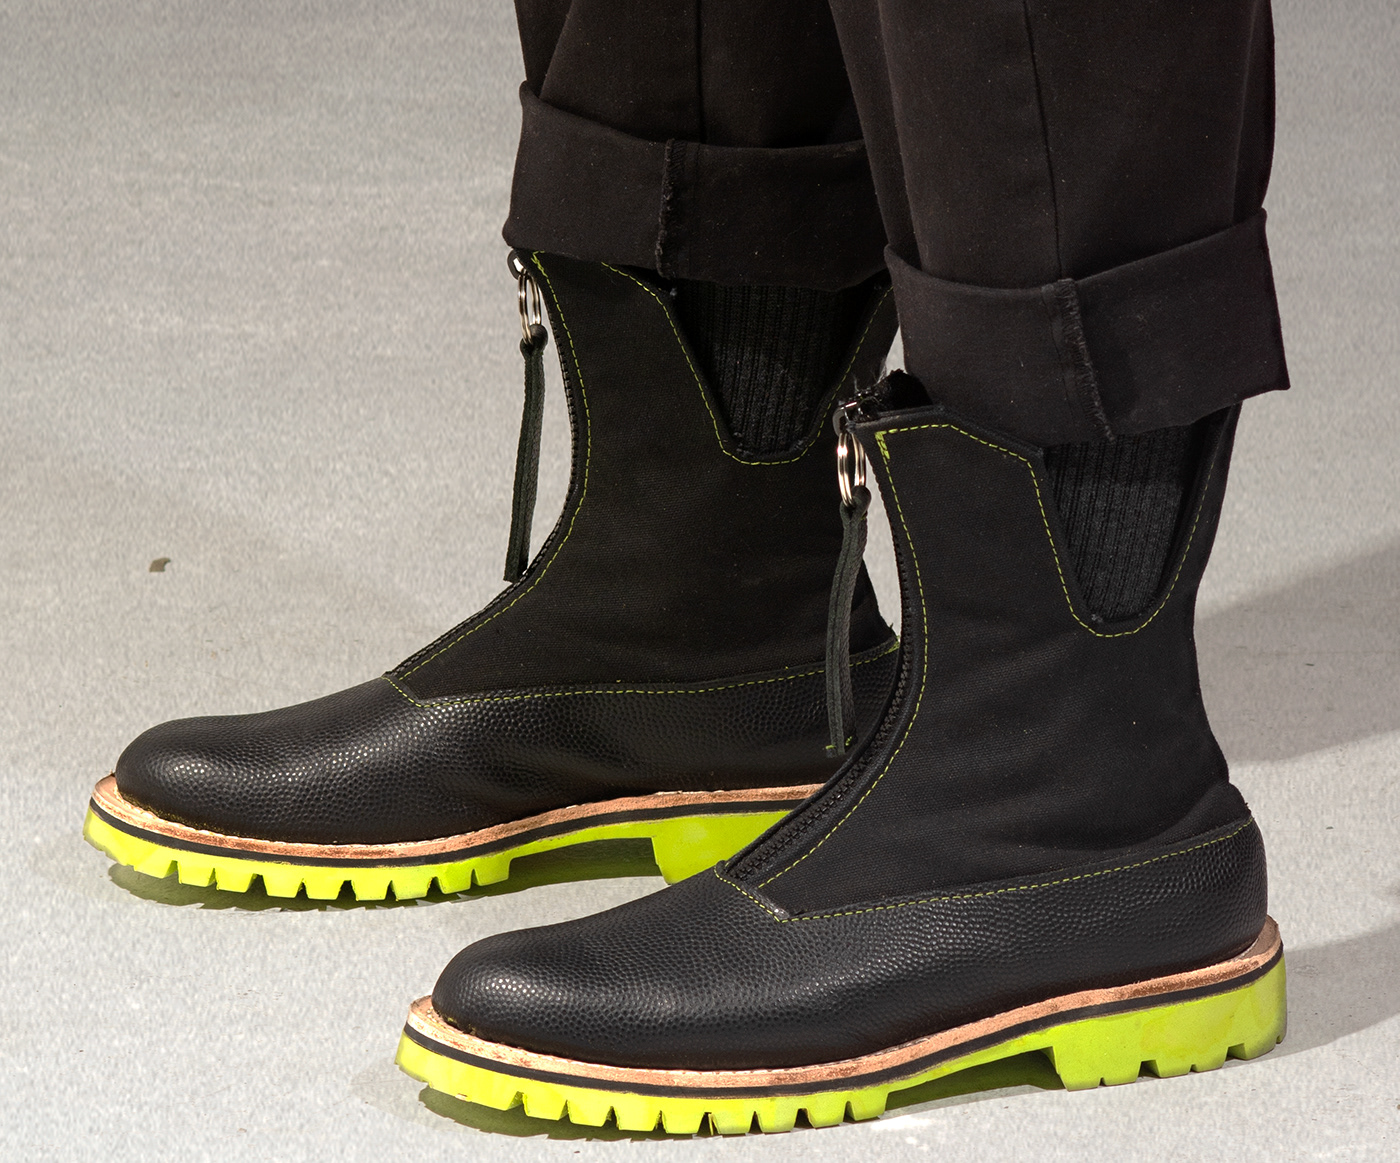 boot shoe footwear Fashion  craft footwear design BOOT DESIGN Fashion Accessories design product design 